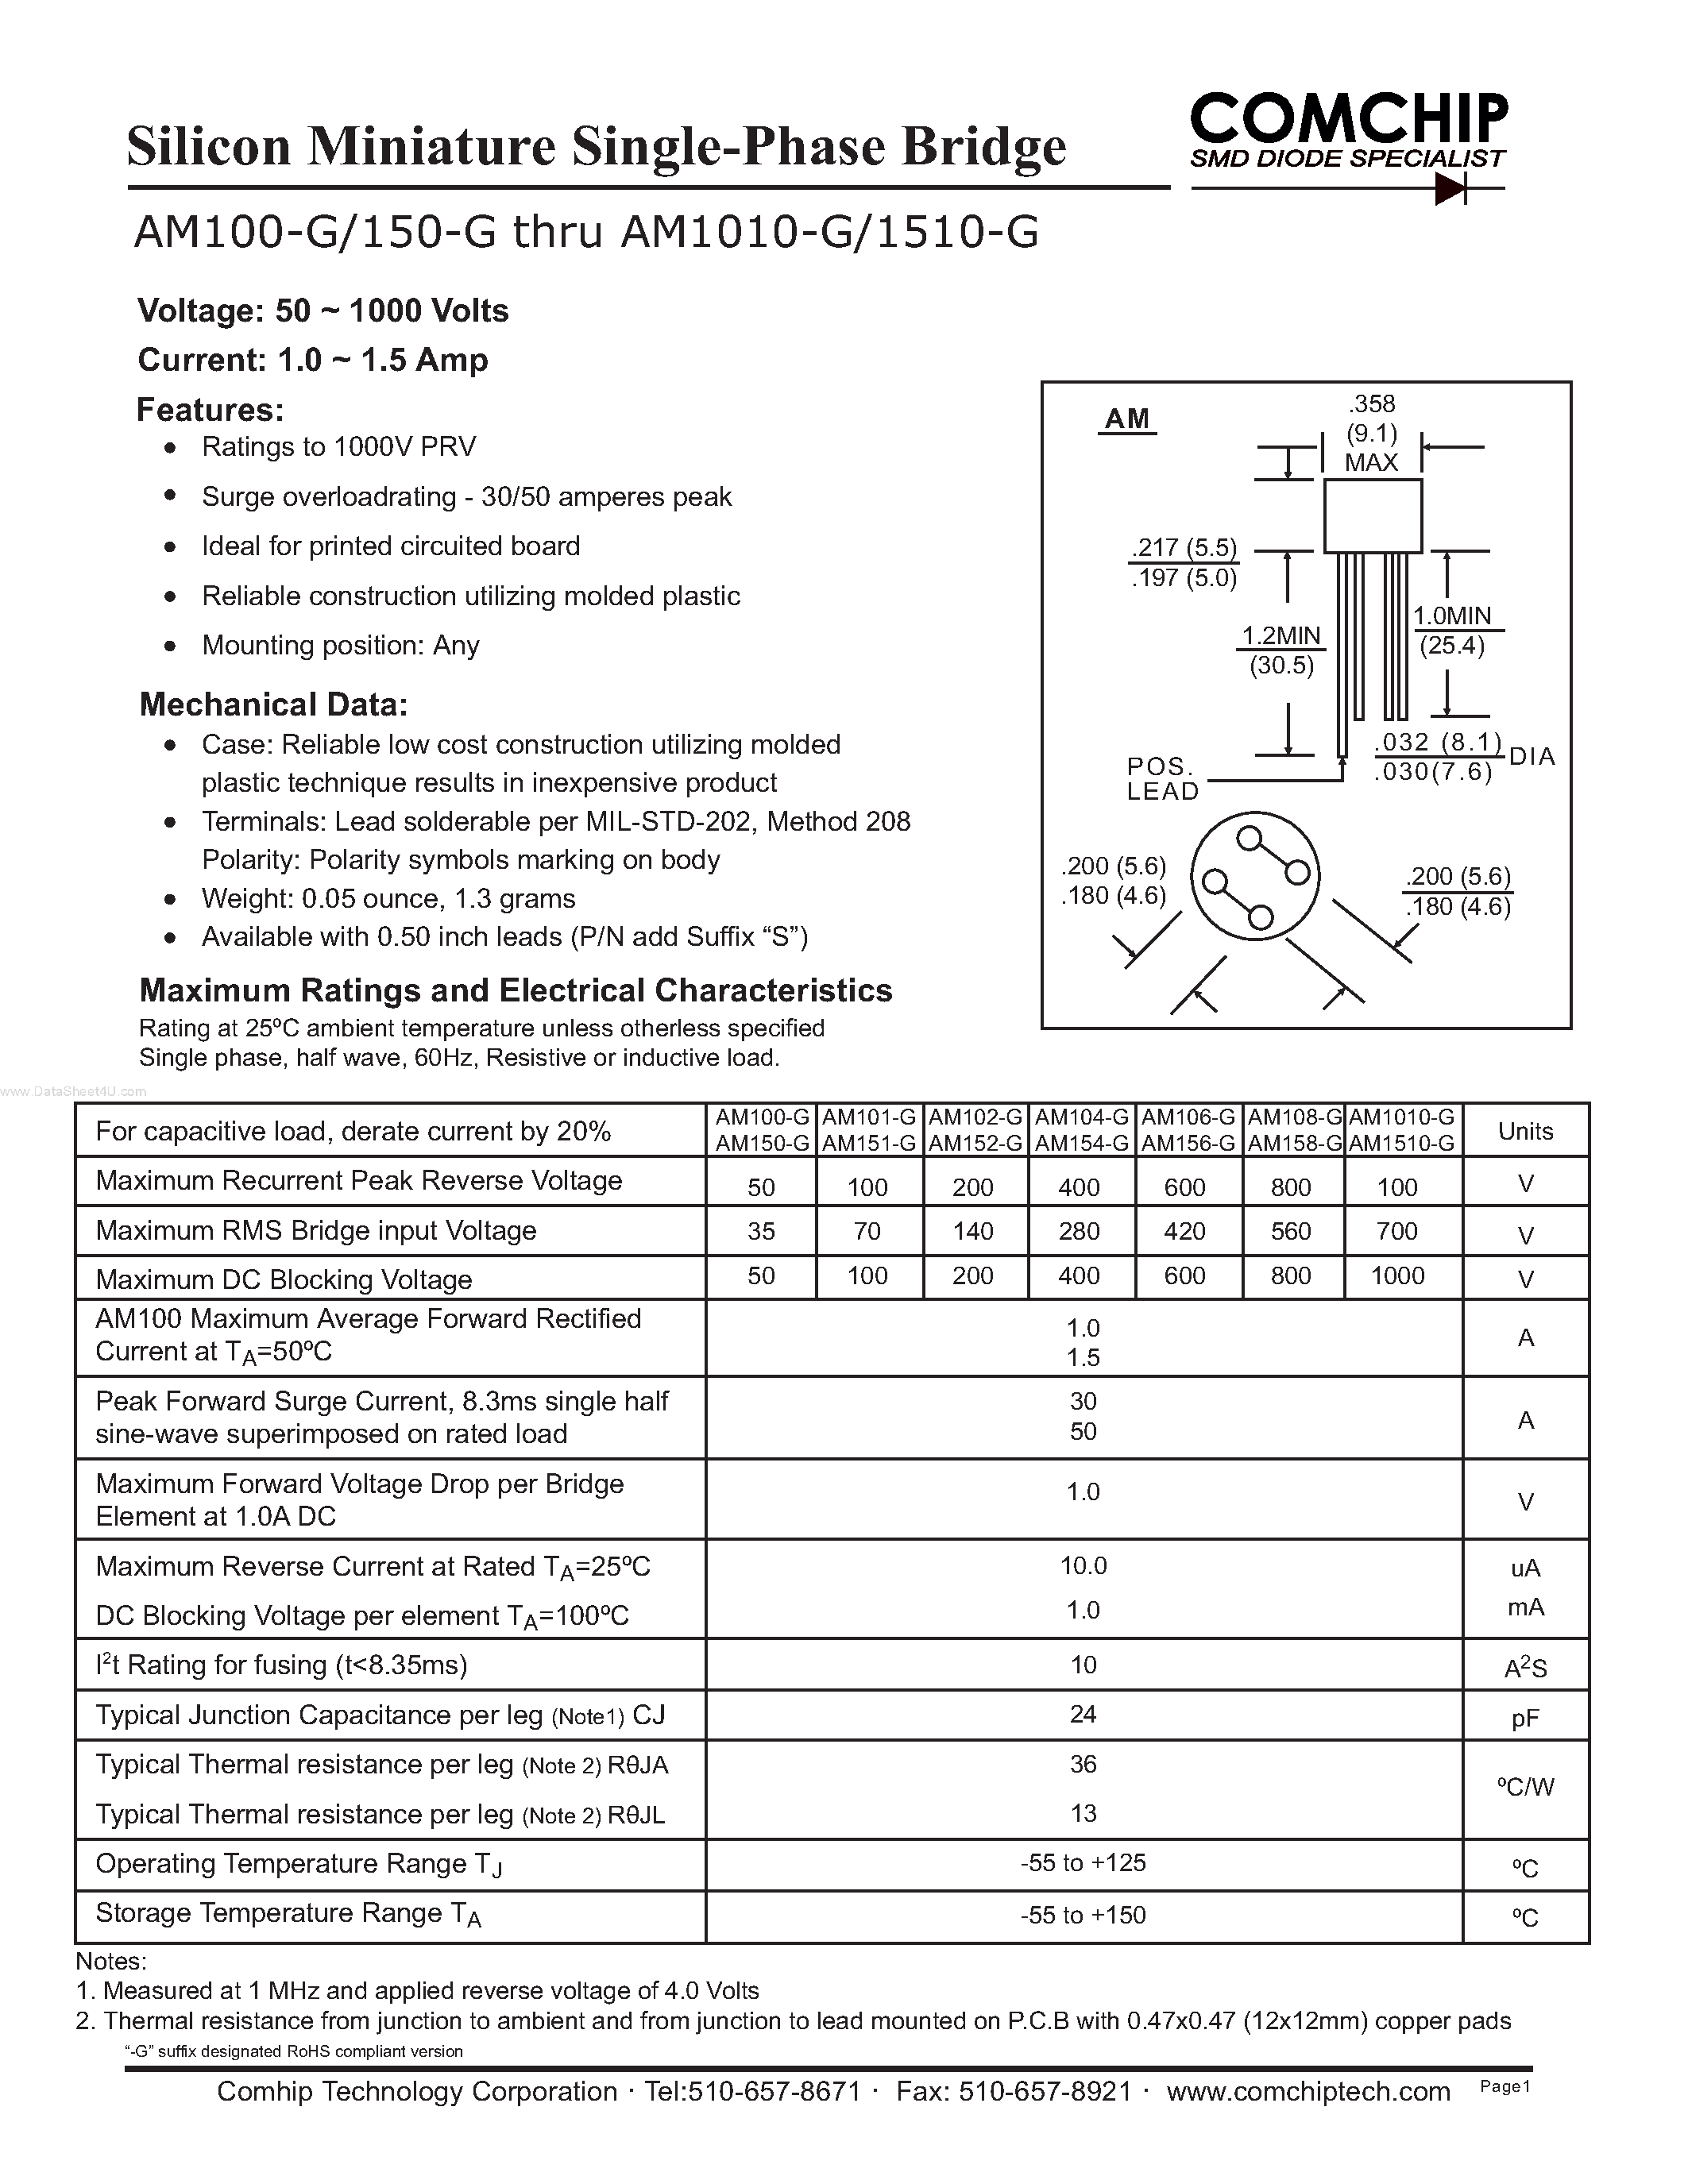 Datasheet AM100-G - (AMxxx-G) Silicon Miniature Single-Phase Bridge page 1